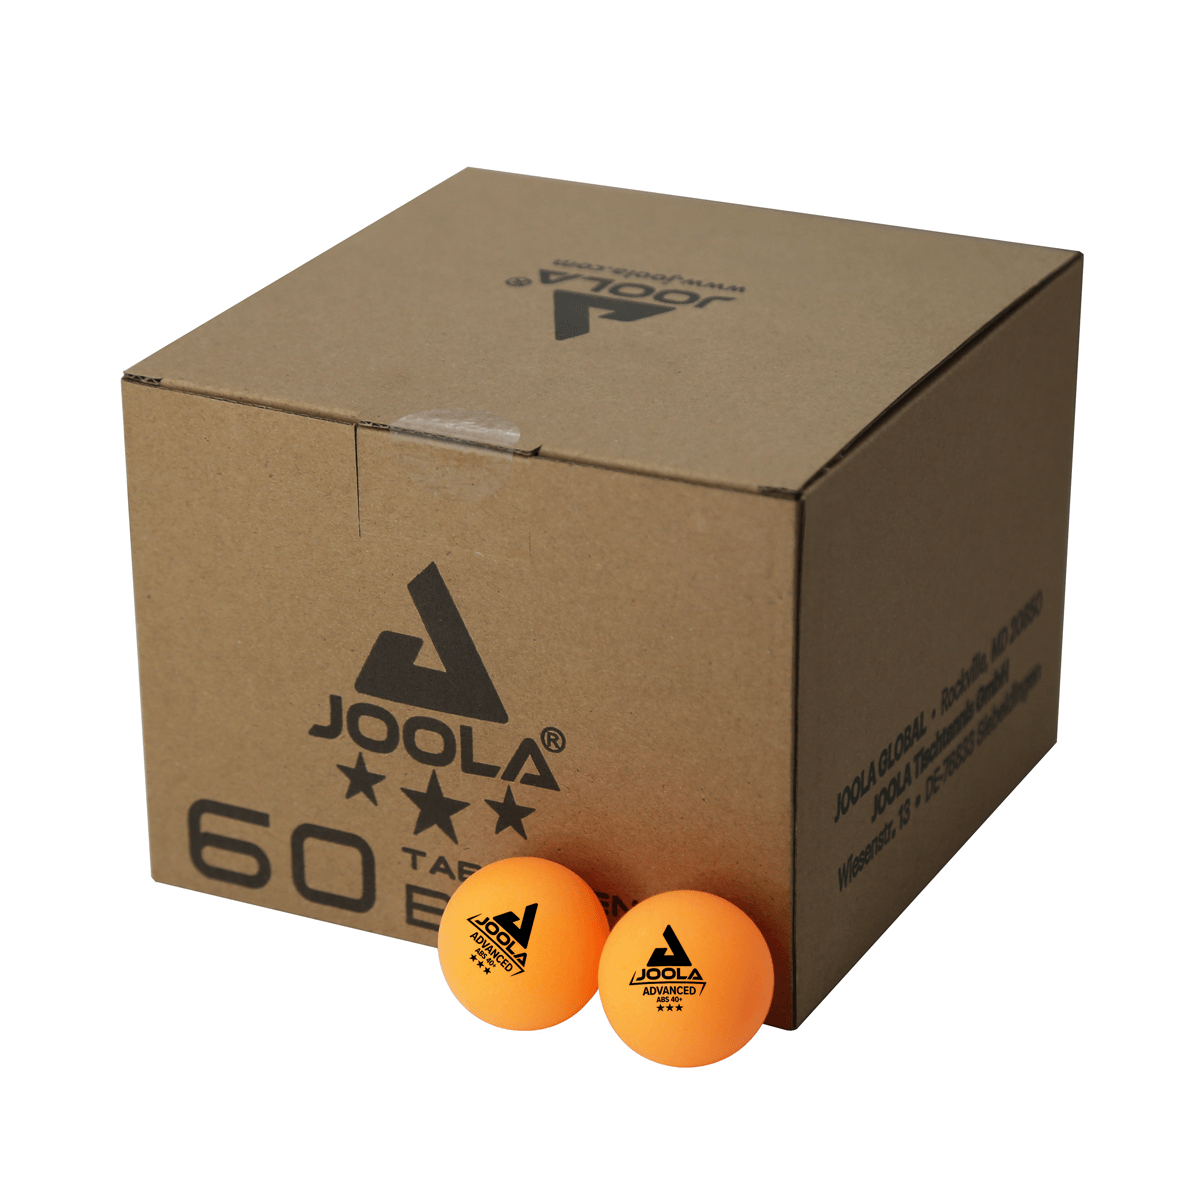 JOOLA Orange 3-Star Training Table Tennis Balls (60 Pack)